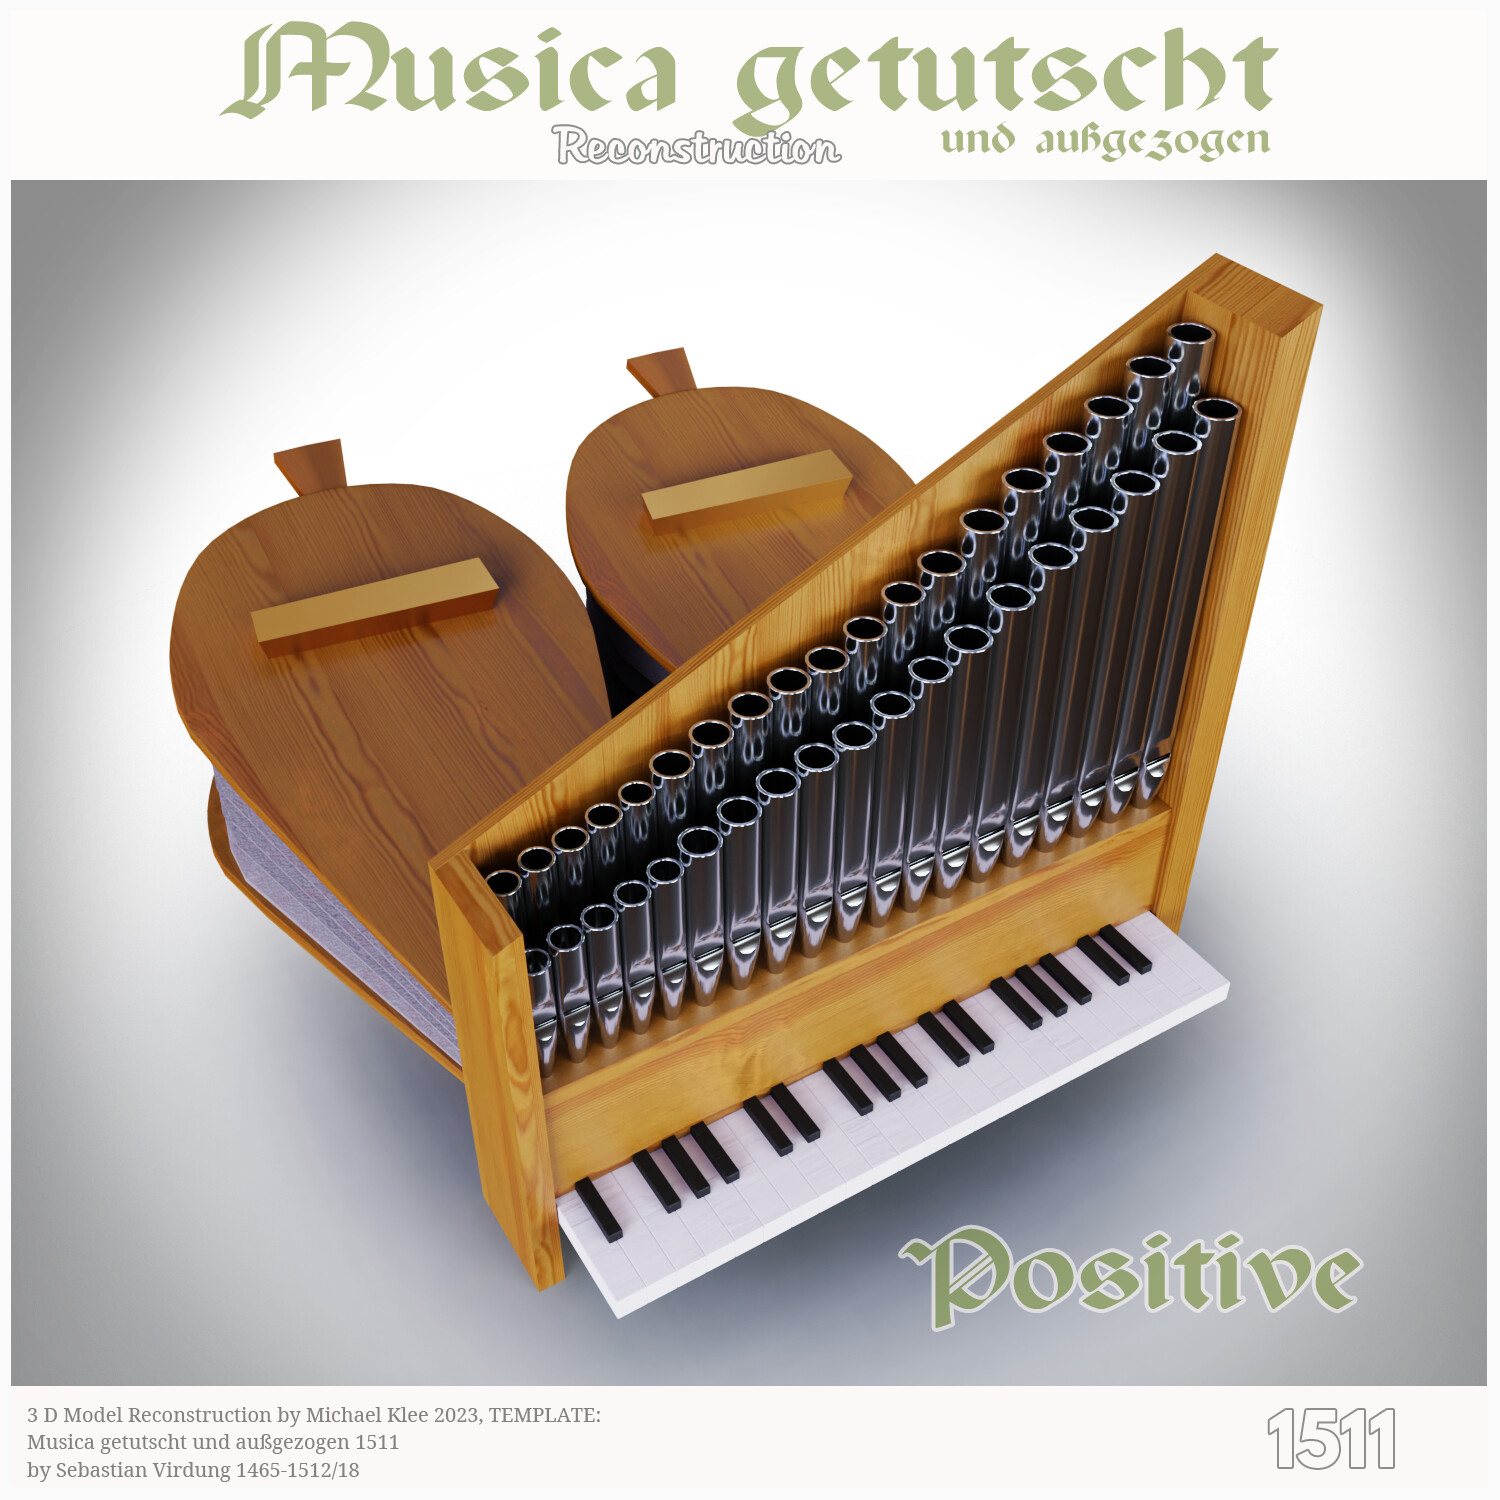 Musica getutscht und außgezogen - by Sebastian Virdung 1511 - Positive -  Michael Klee